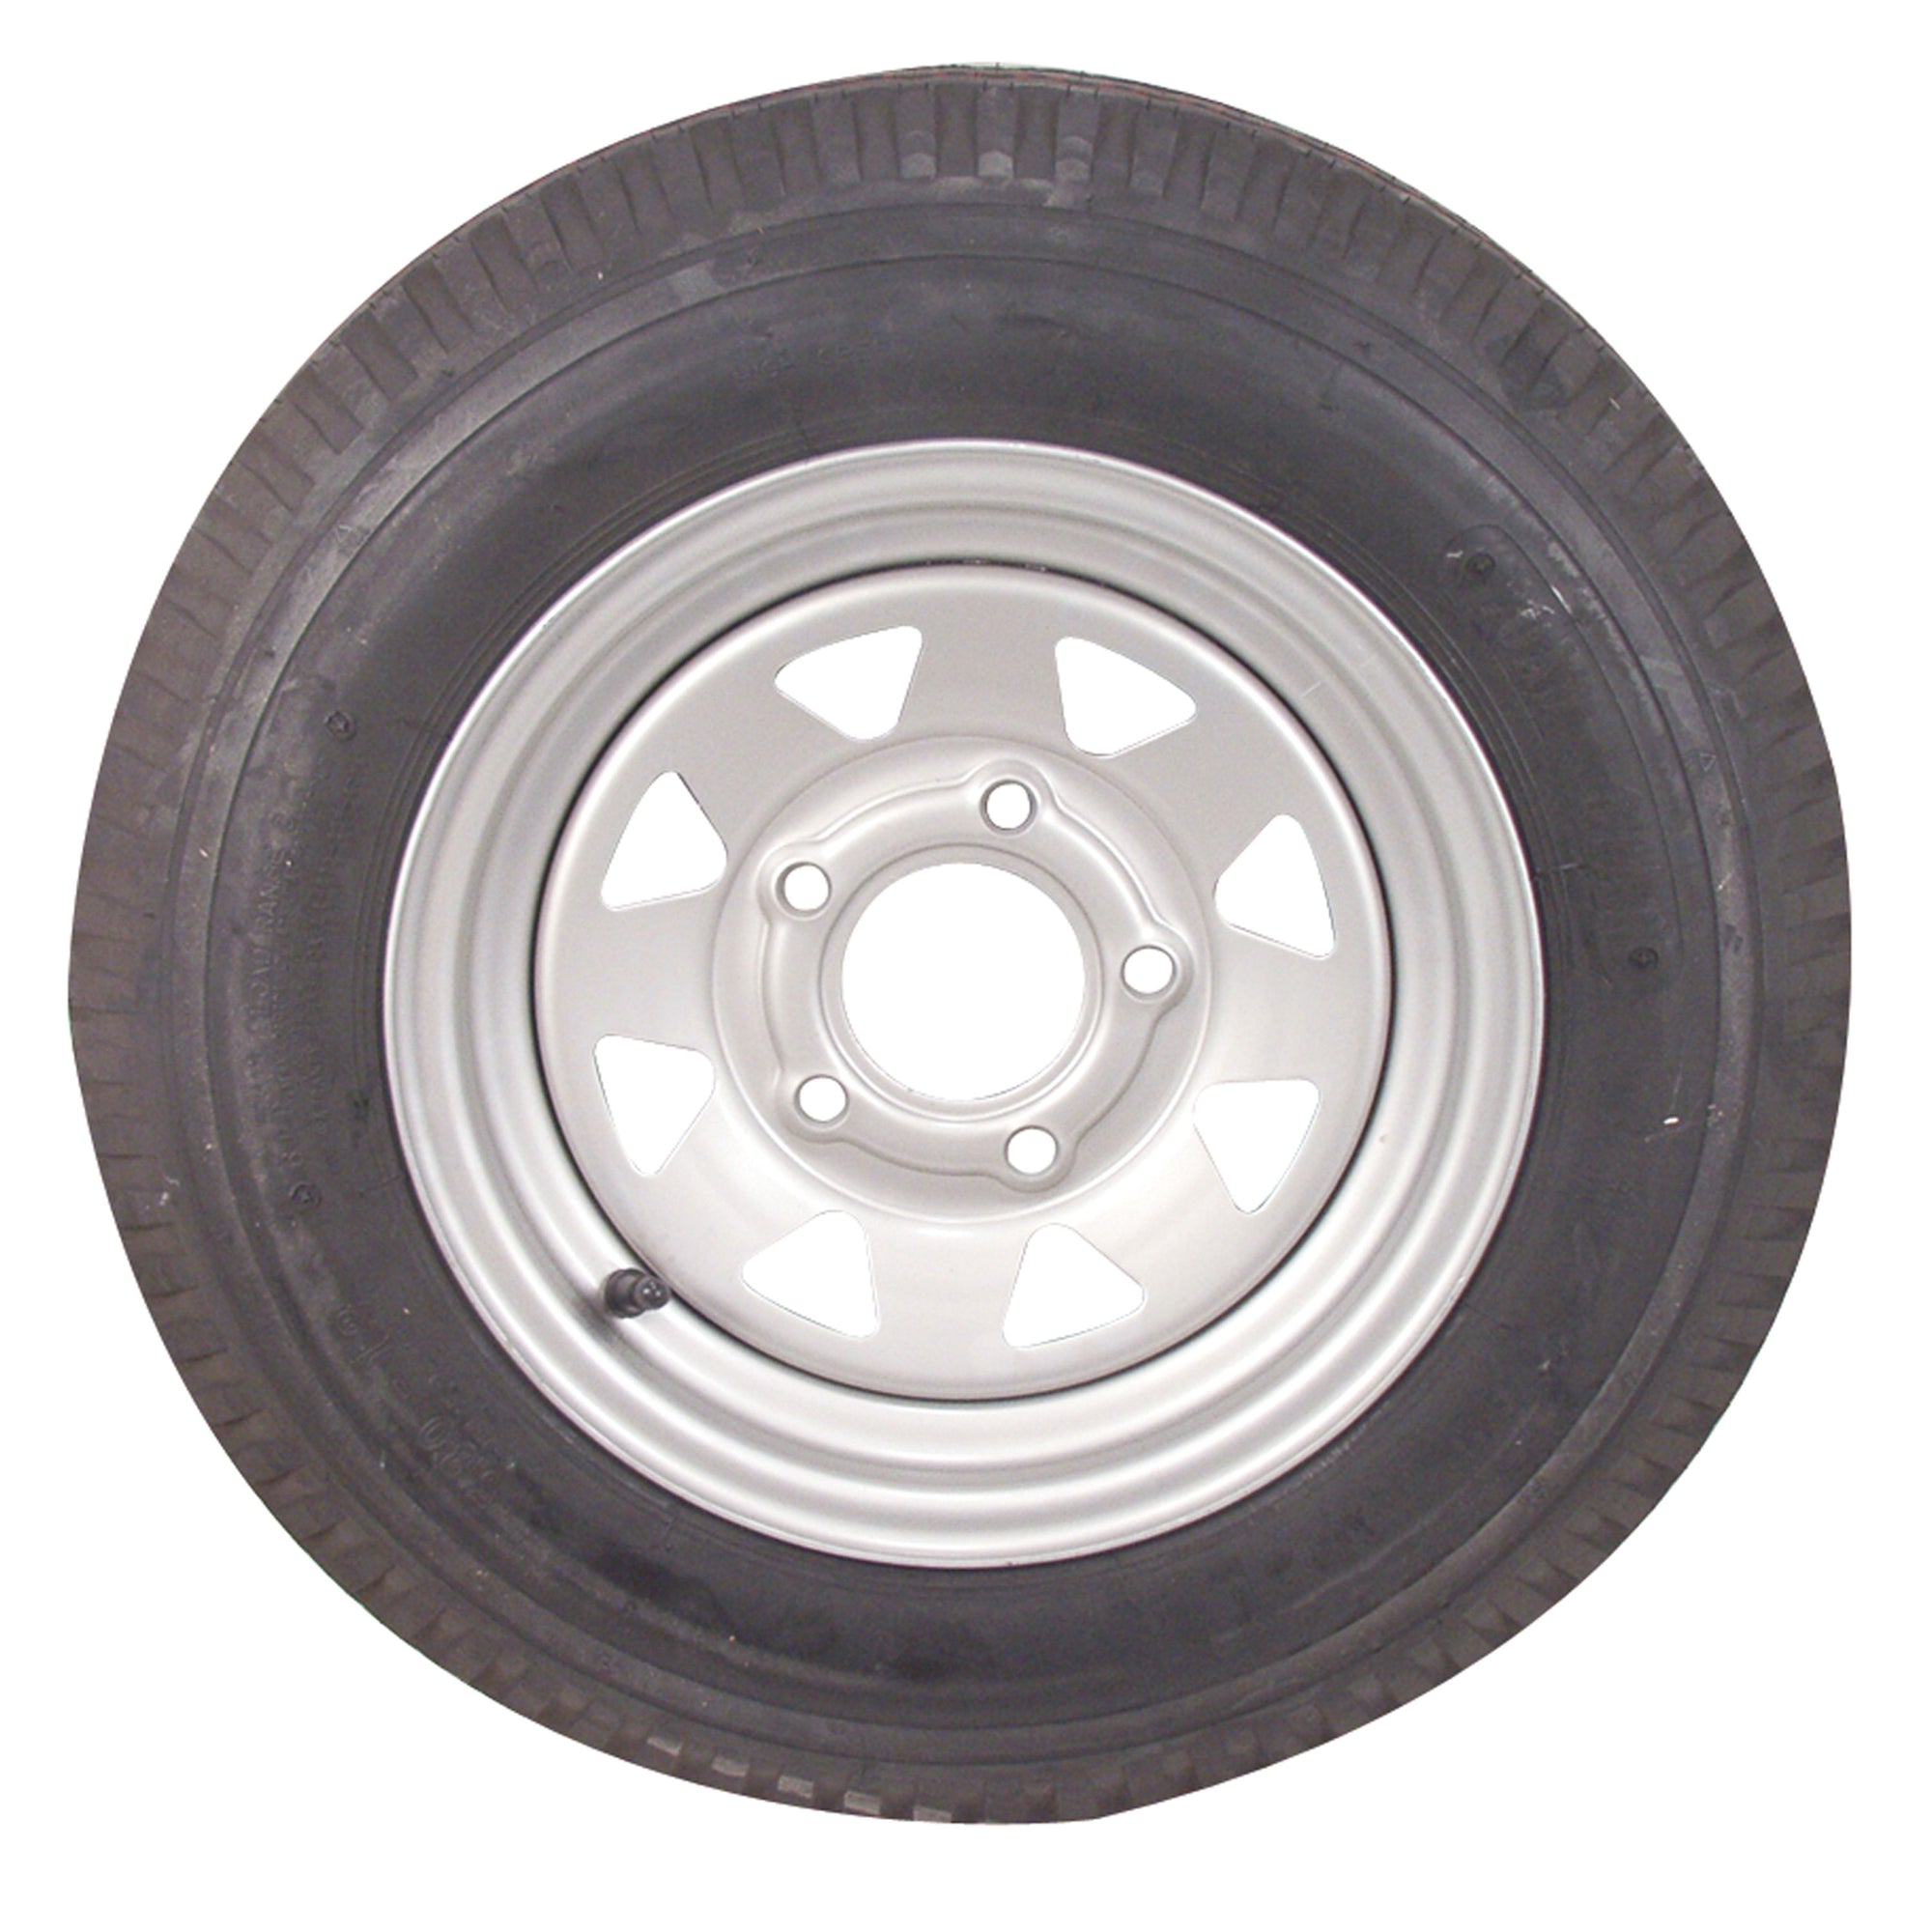 Americana Tire and Wheel 3S450 Economy Bias Tire and Wheel ST205/75D14 C/5-Hole - Galvanized Spoke Rim